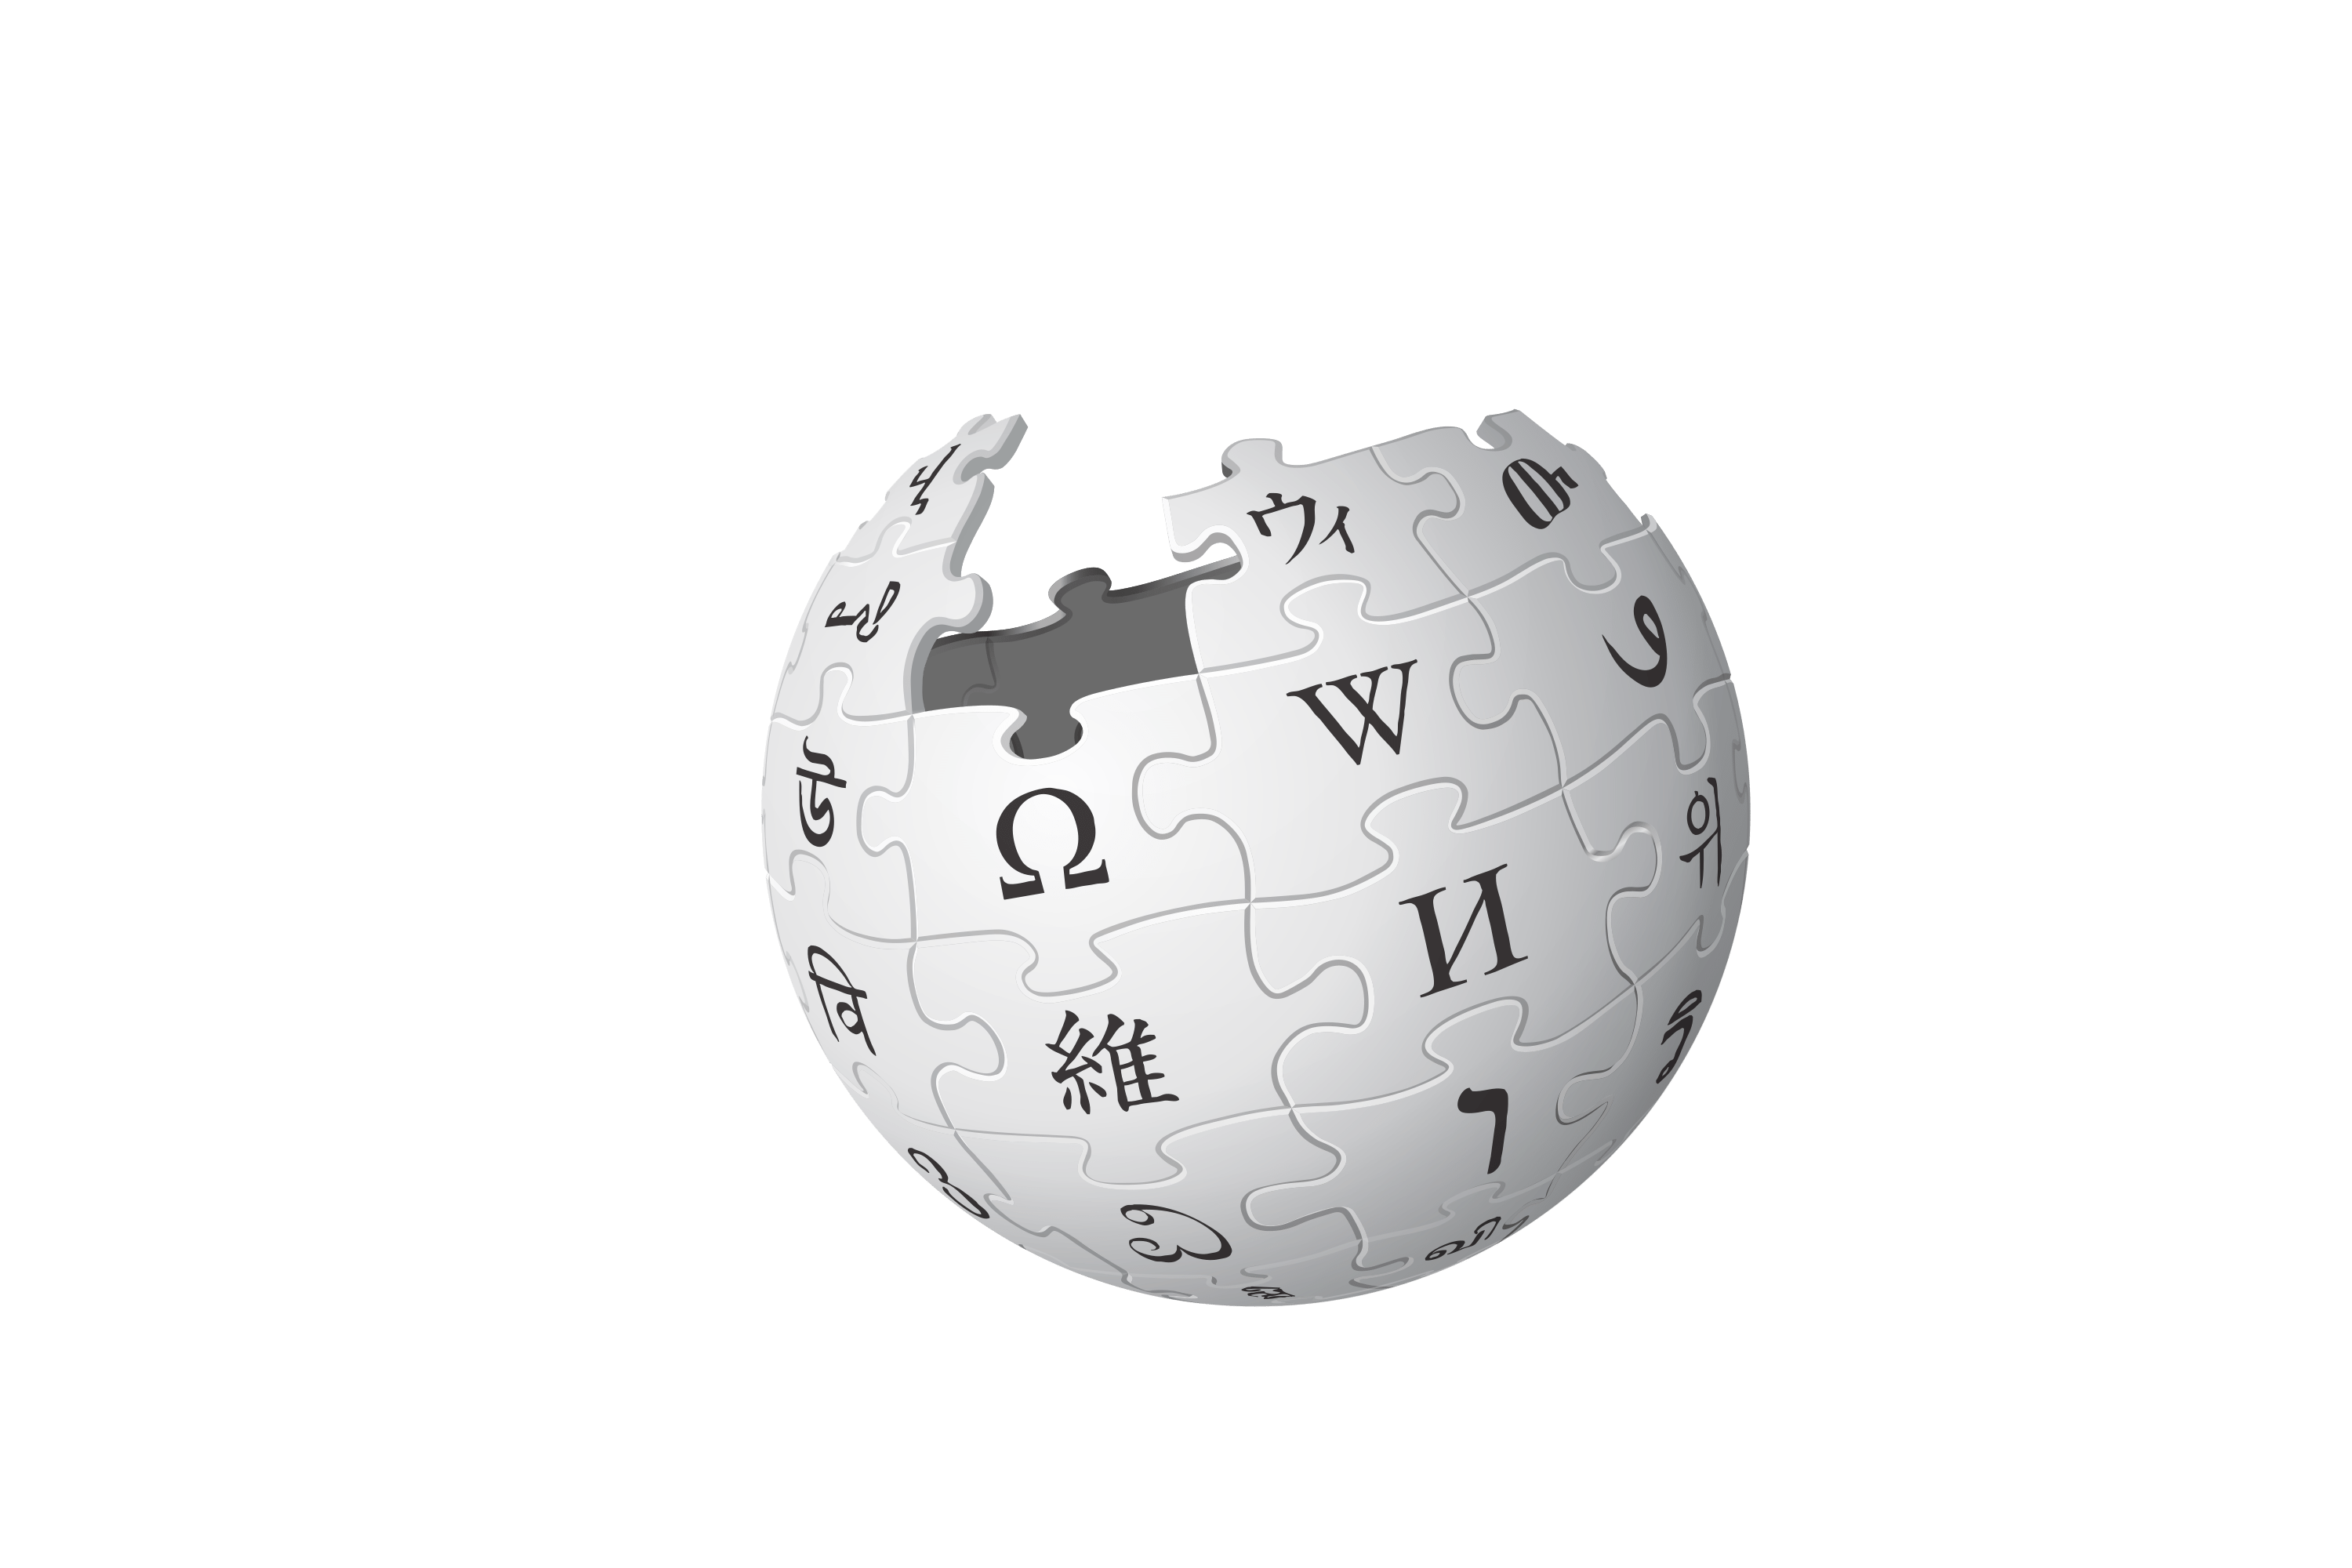 1 ru wikipedia org wiki. Википедия логотип. Значок Википедии. Логотип Википедии на прозрачном фоне. Википедия картинки.